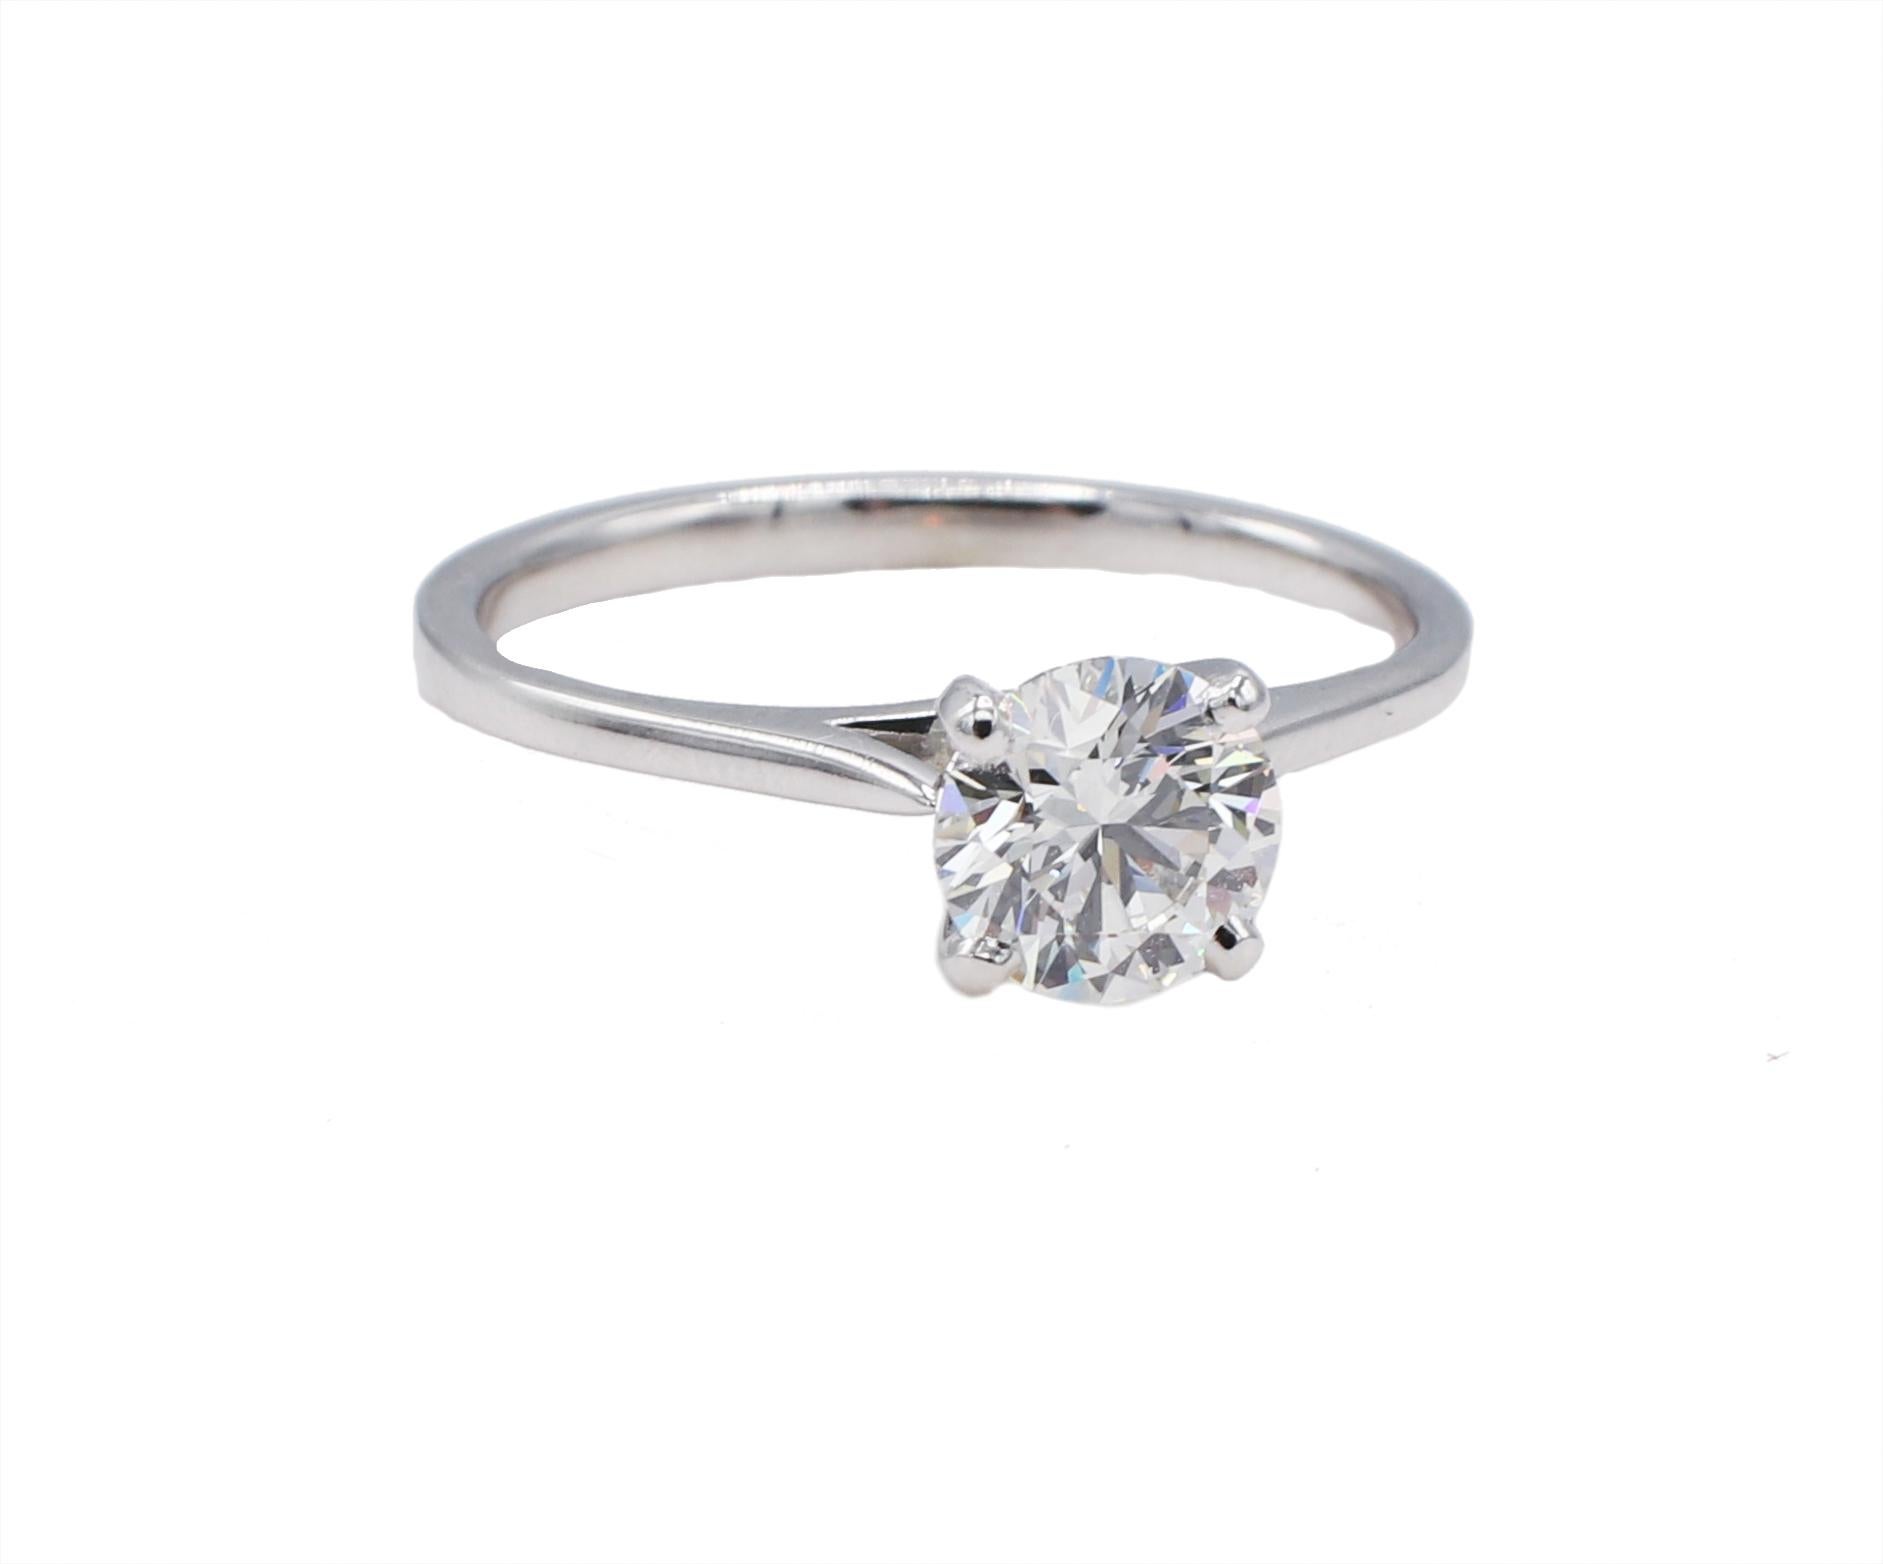 GIA Certified 0.90 Carat G VS2 Platinum Natural Diamond Solitare Engagement Ring Size 6
Metal: Platinum
Weight: 3.4 grams
Diamond: .90 Carat Round Brilliant G VS2 Natural Diamond
GIA report # 5156636095 (please note report pictured for details)